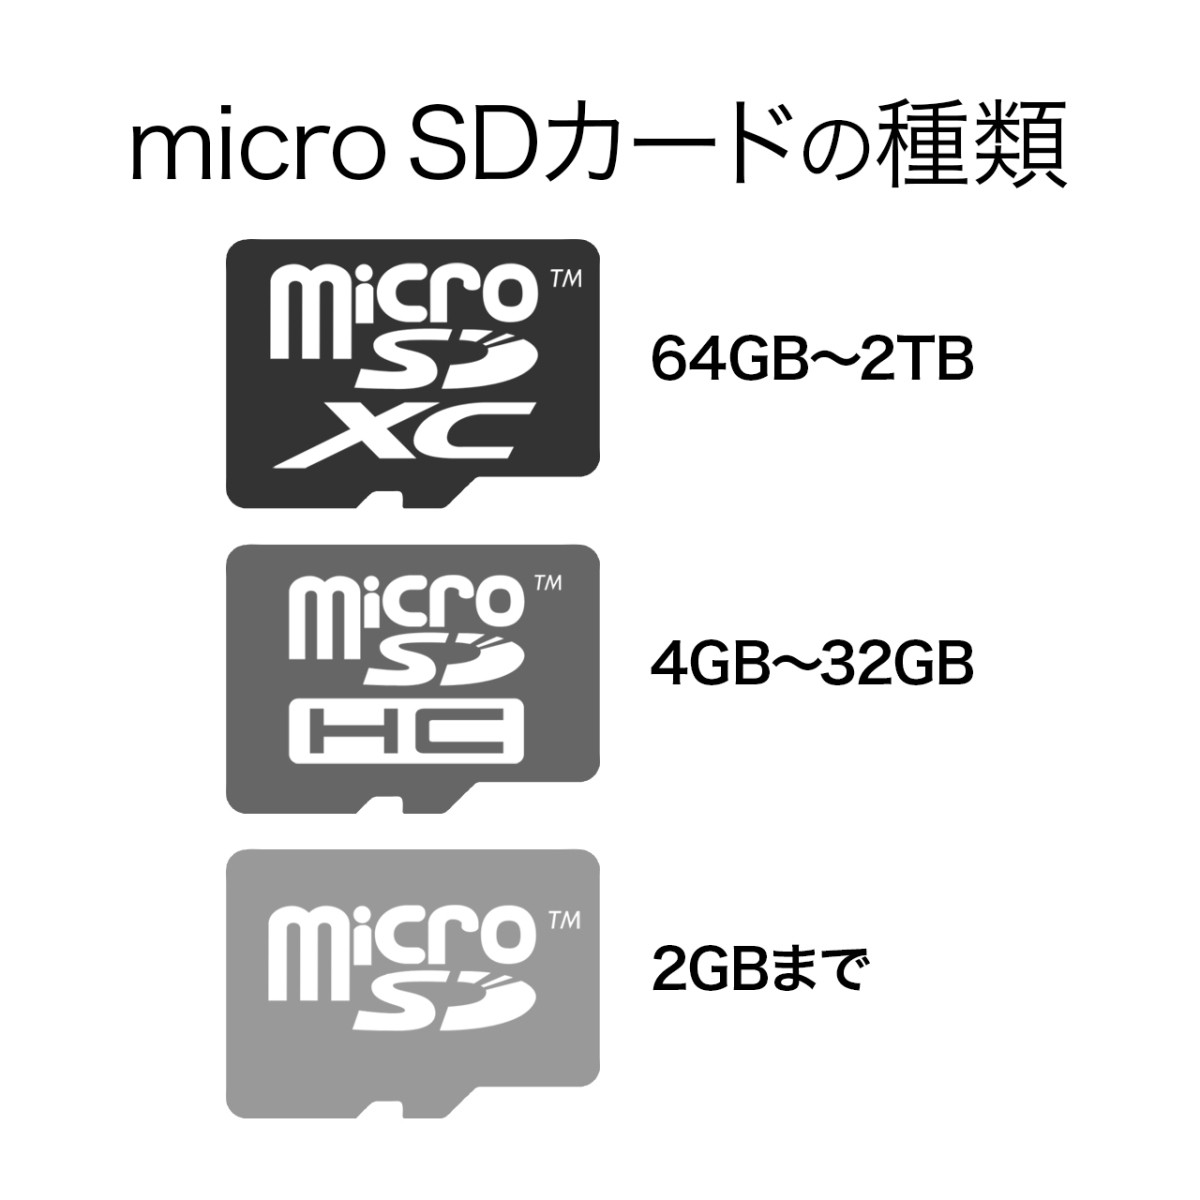 SDカード SDHC 32GB LAZOS リーダーメディアテクノ UHS-I U1 CLASS10 R:40MB s 日本語パッケージ L-B32SDH10-U1 ◆メ